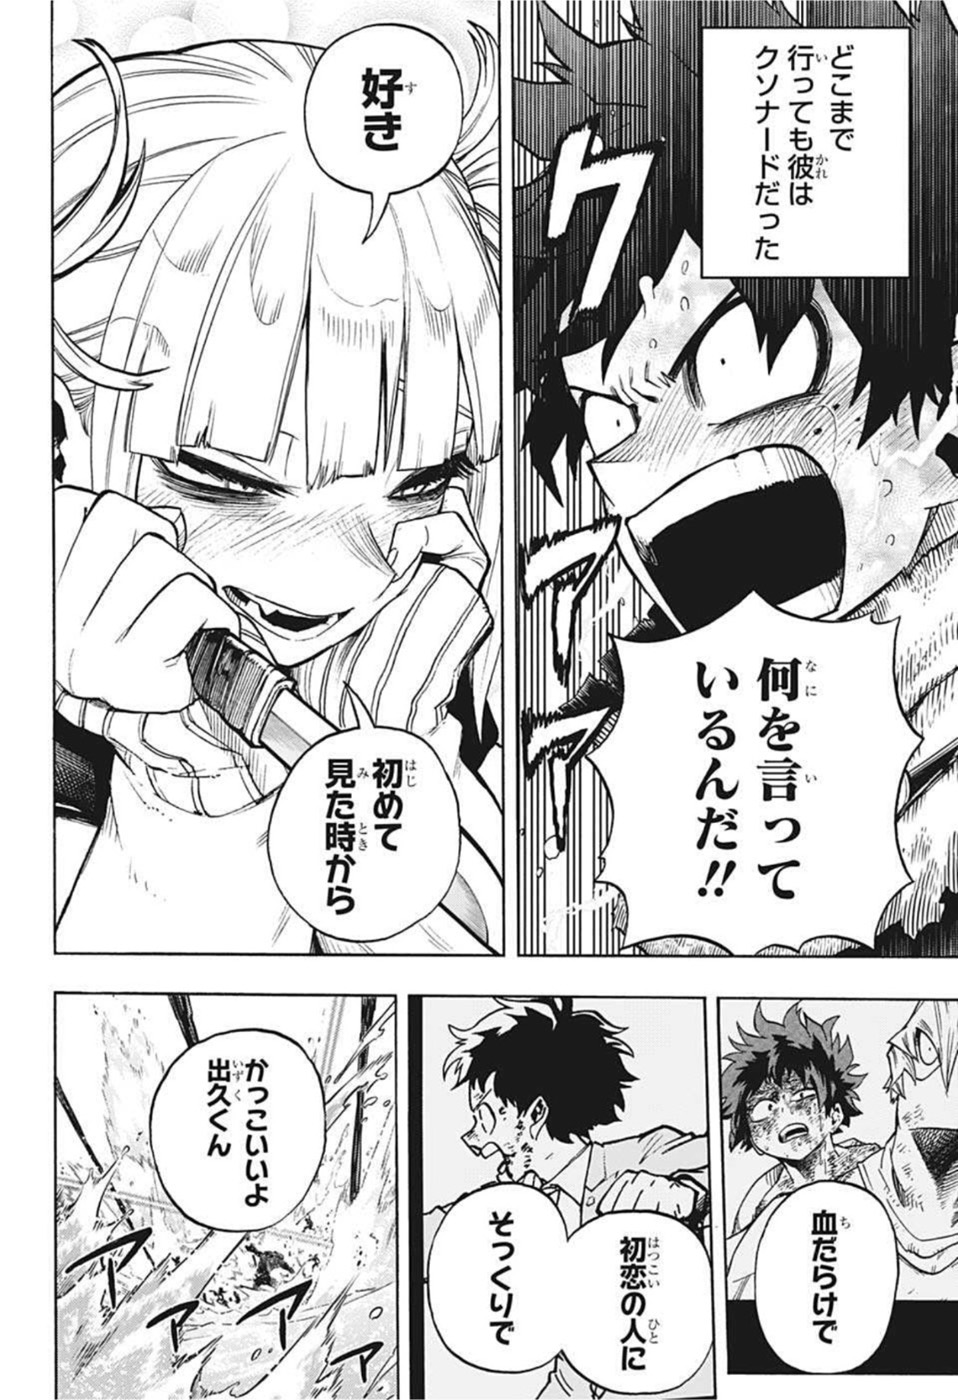 Boku no Hero Academia - Chapter 348 - Page 2